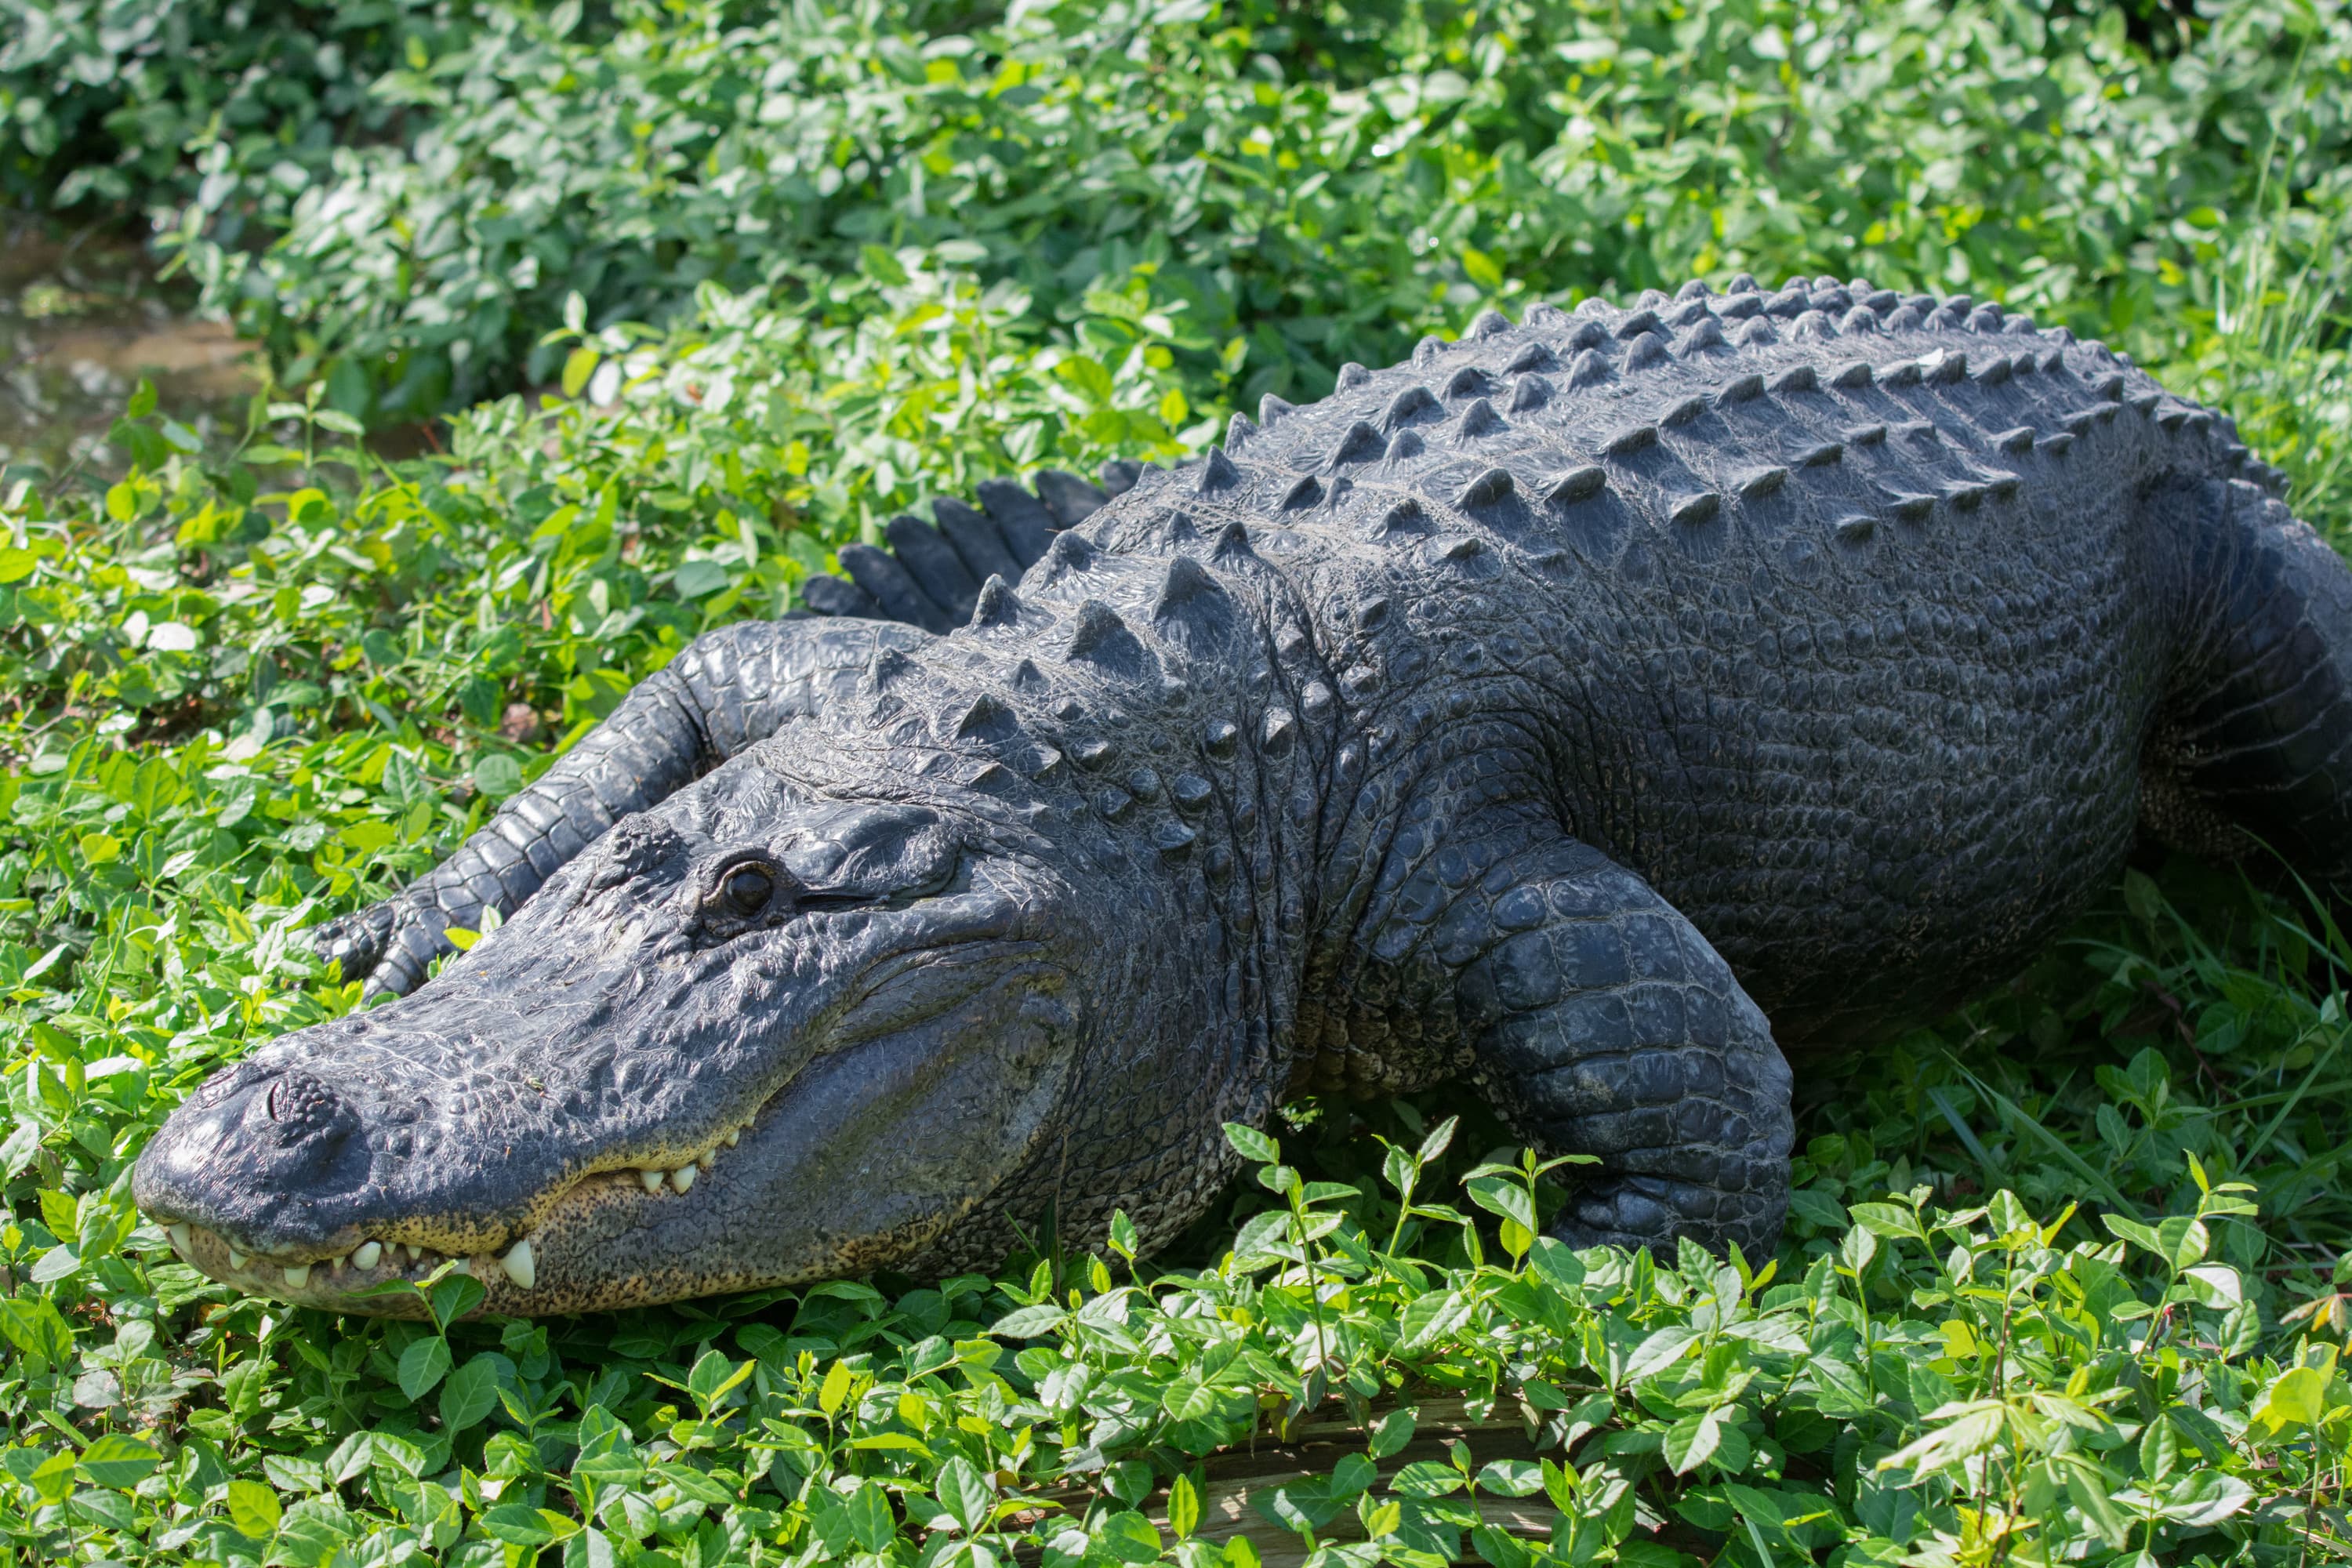 Alligator_Research_Blog